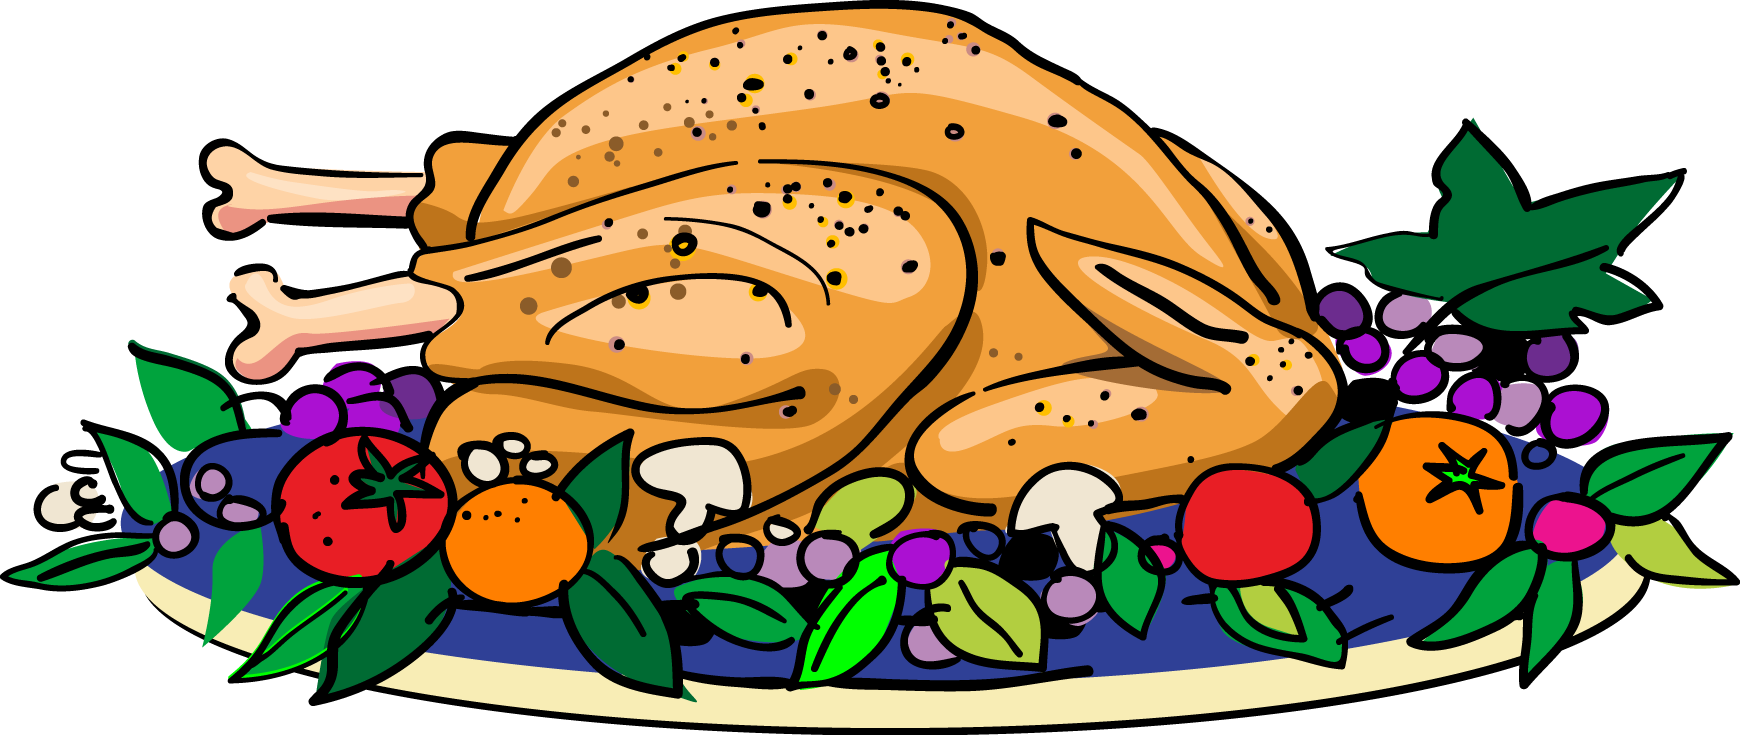 Thanksgiving Turkey Images Free | Free Download Clip Art | Free ...